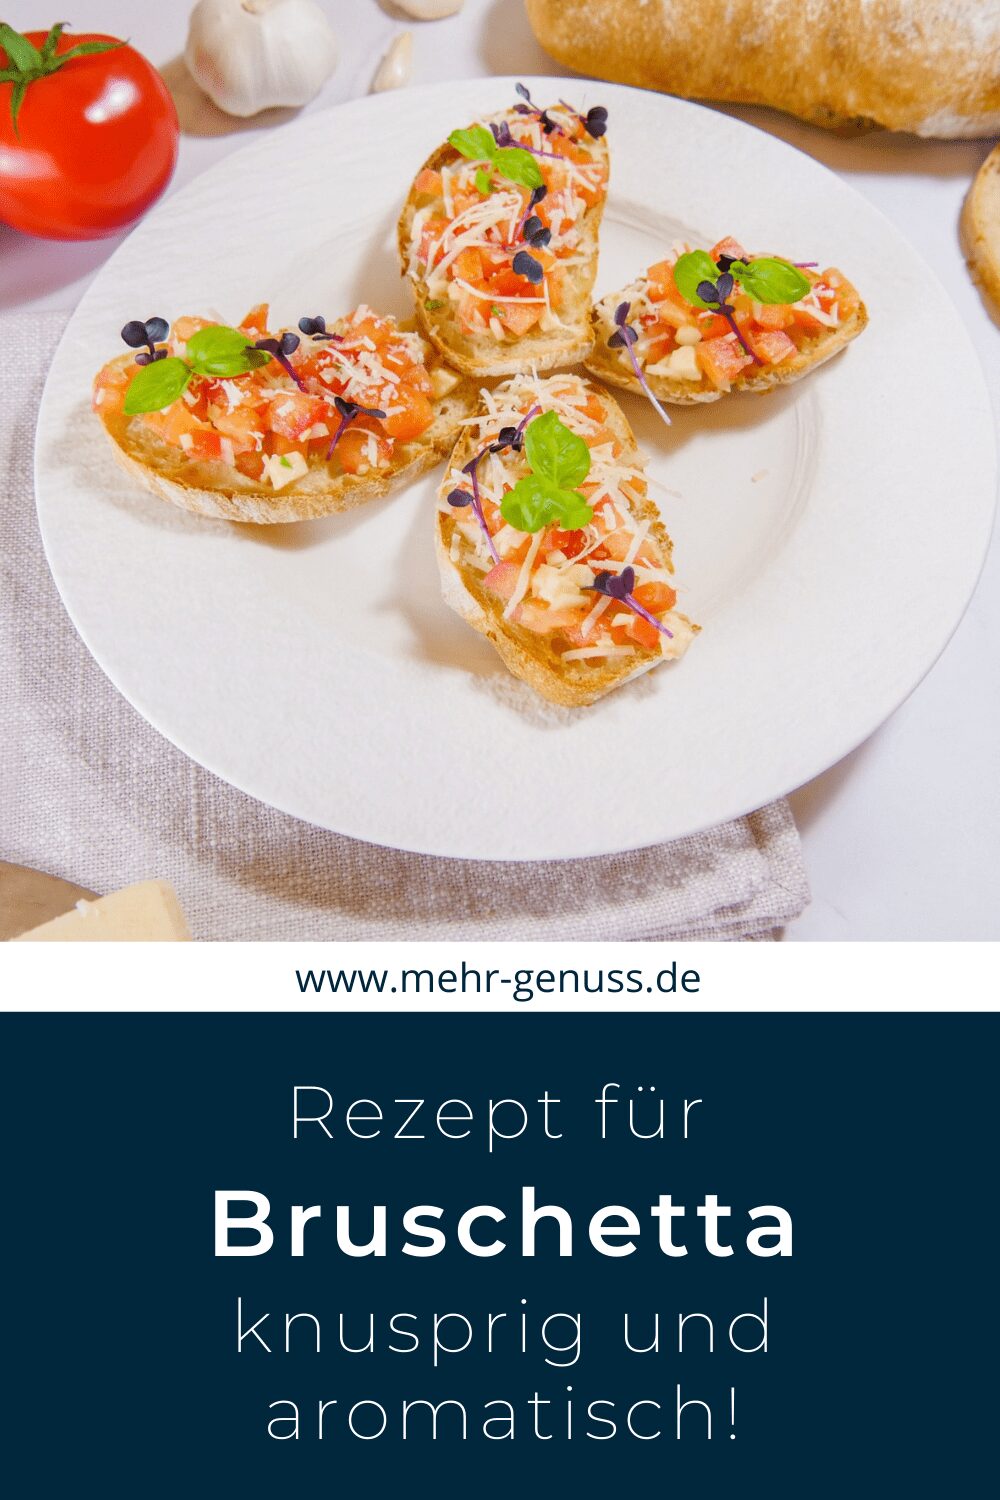 Tomaten-Bruschetta auf Pinterest